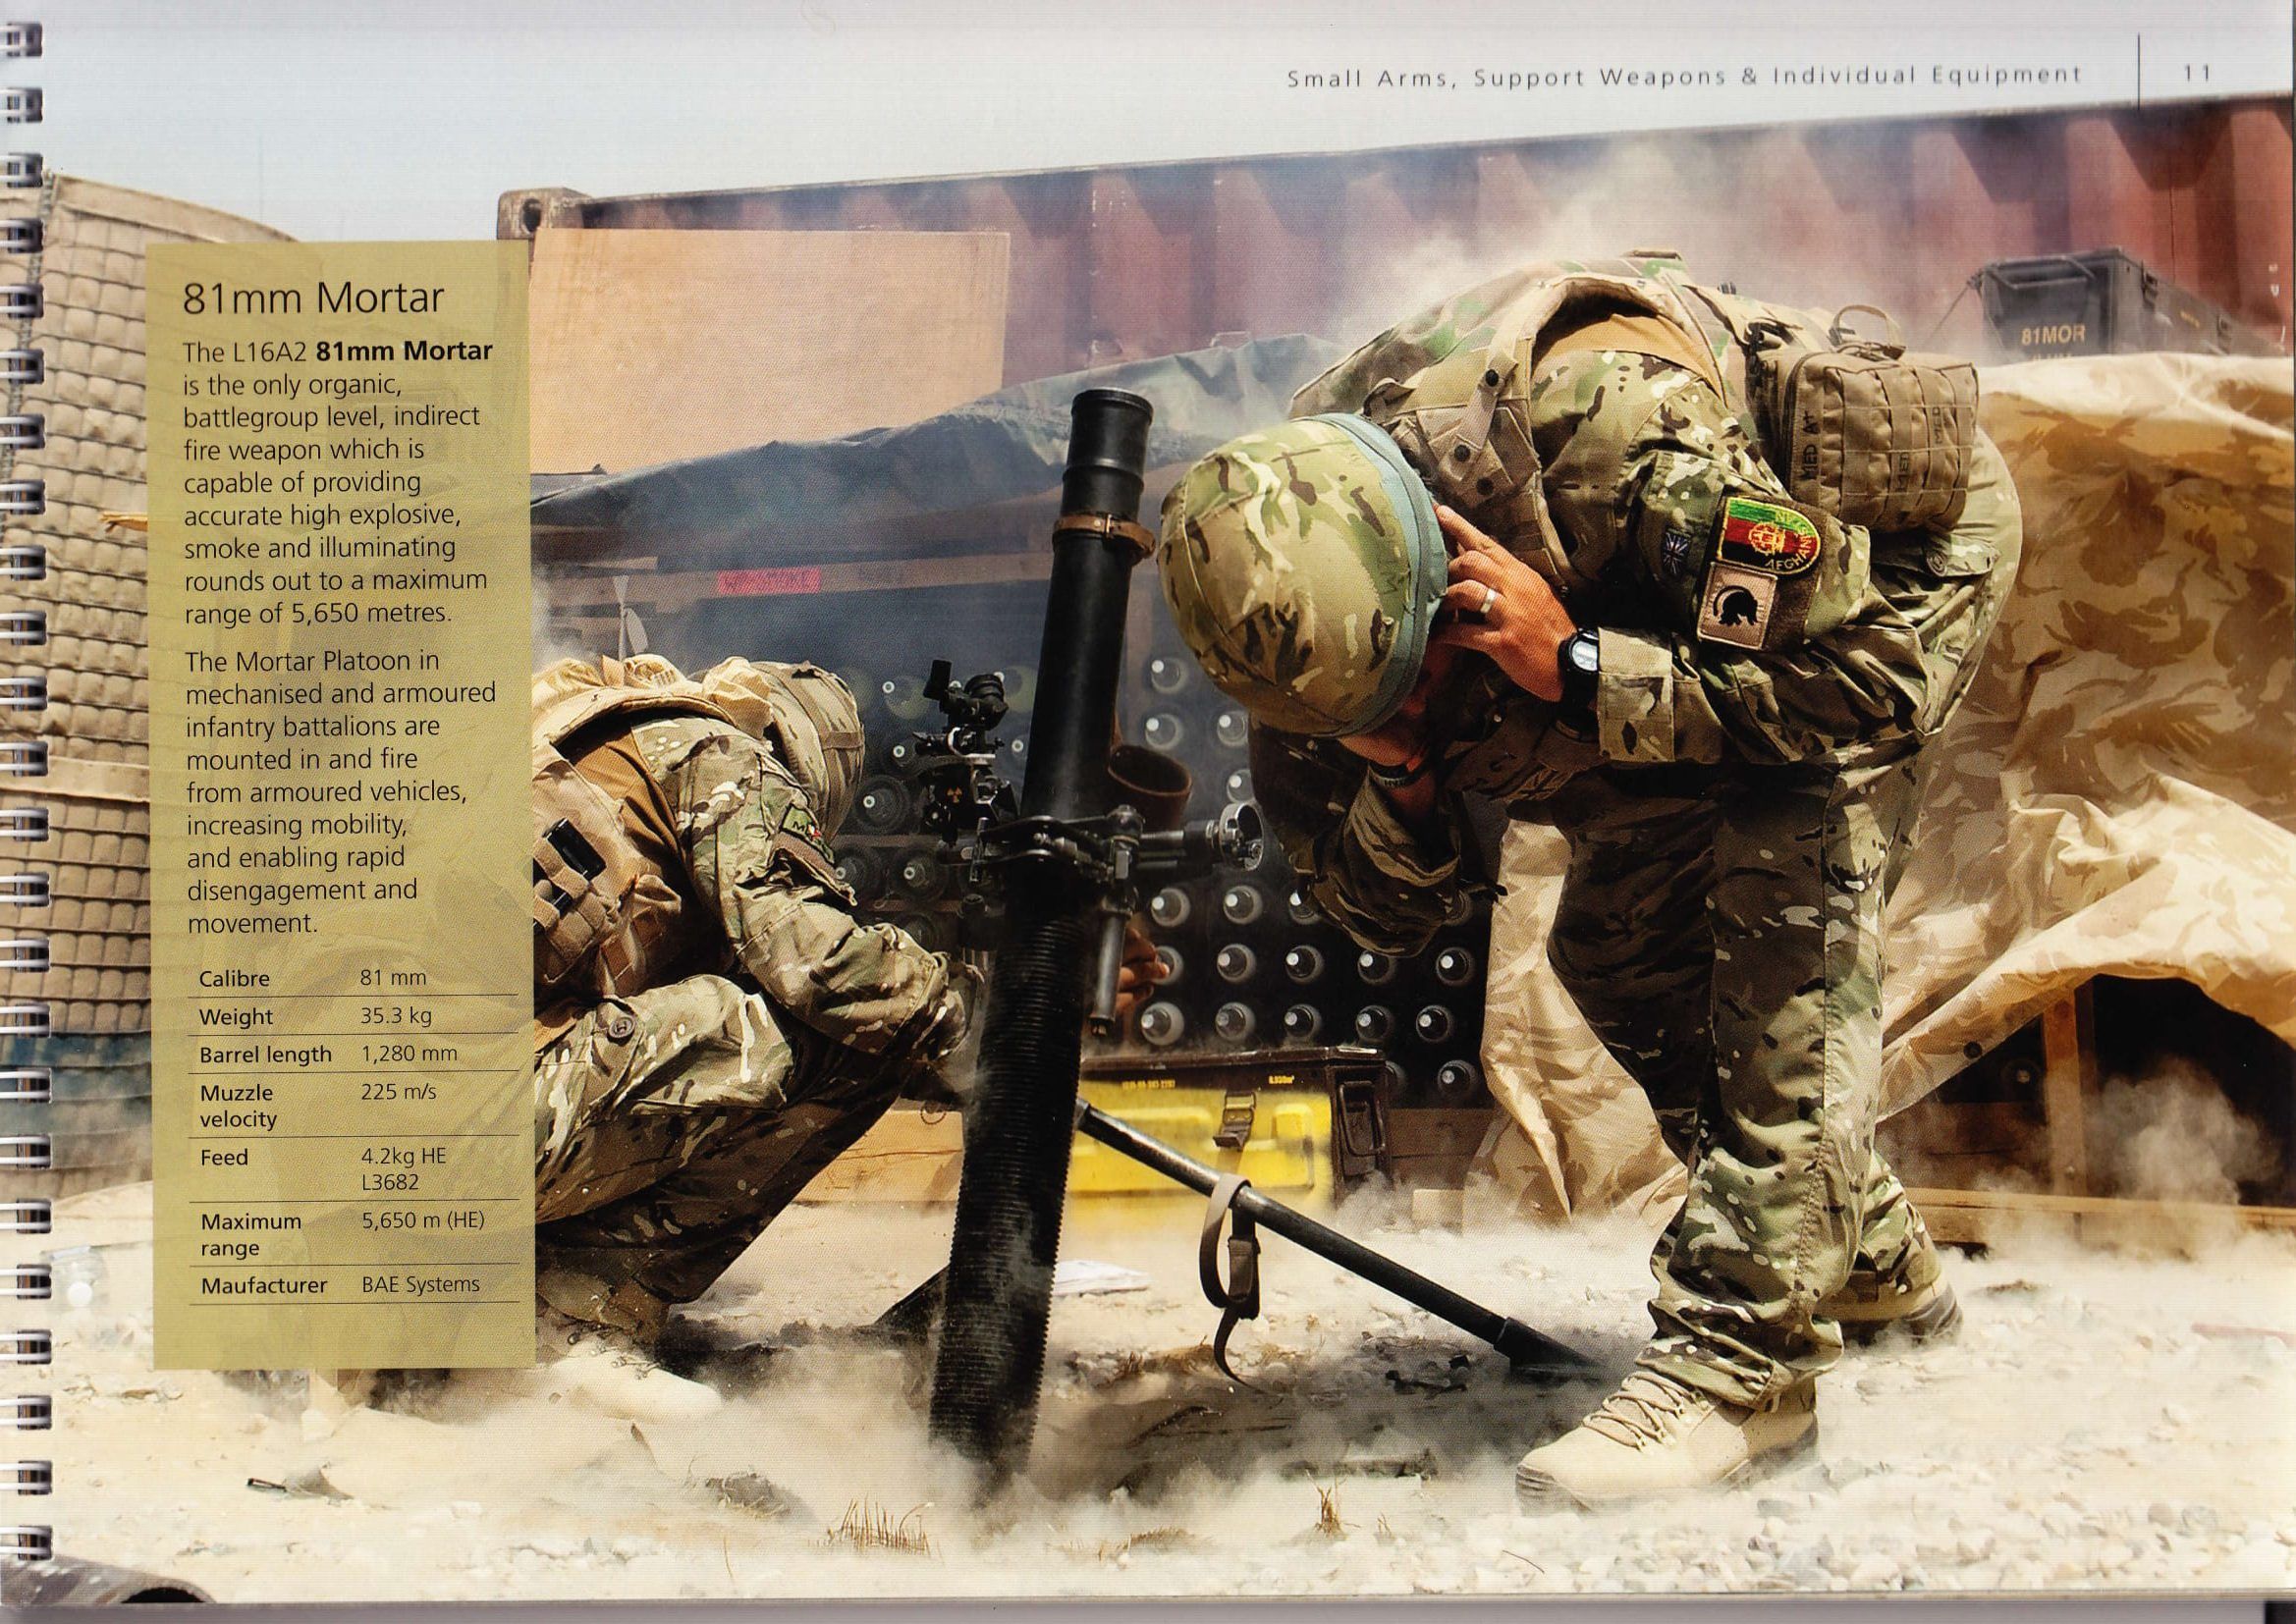 Army Equipment Catalogue advertising BAE Systems Mortar. Image by Matt Kennard. England, 2017.